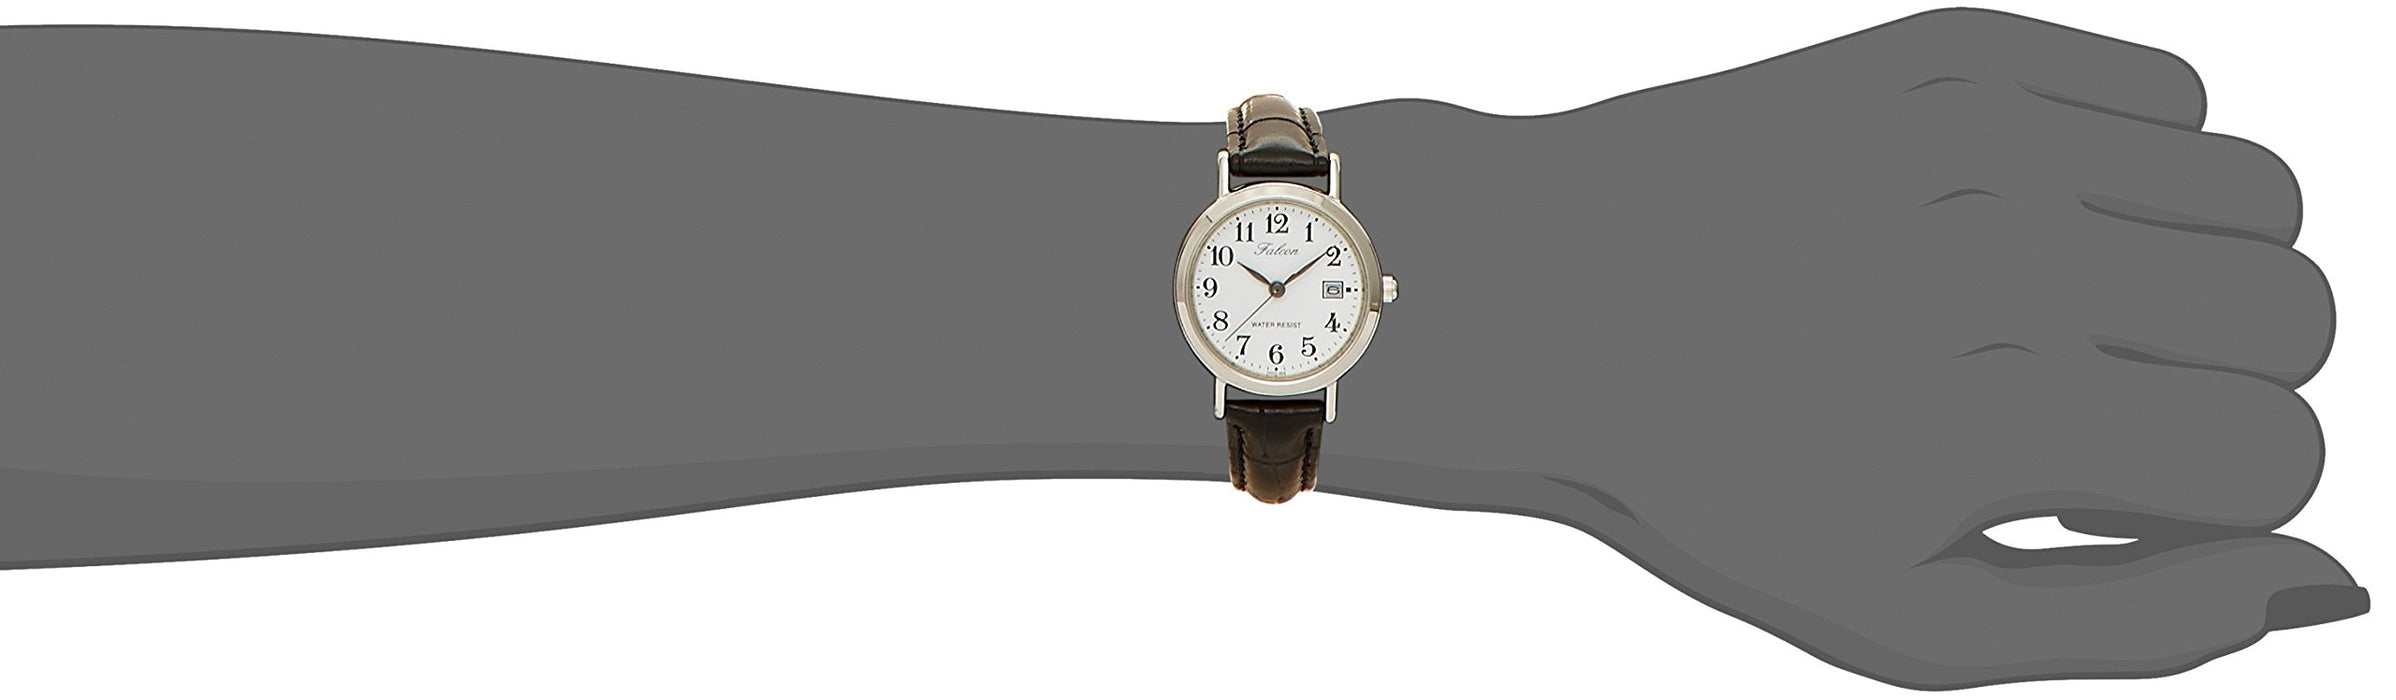 Citizen Q & Q Wrist Watch Date Indicator Leather Belt Black D023-304 Women's NEW_5